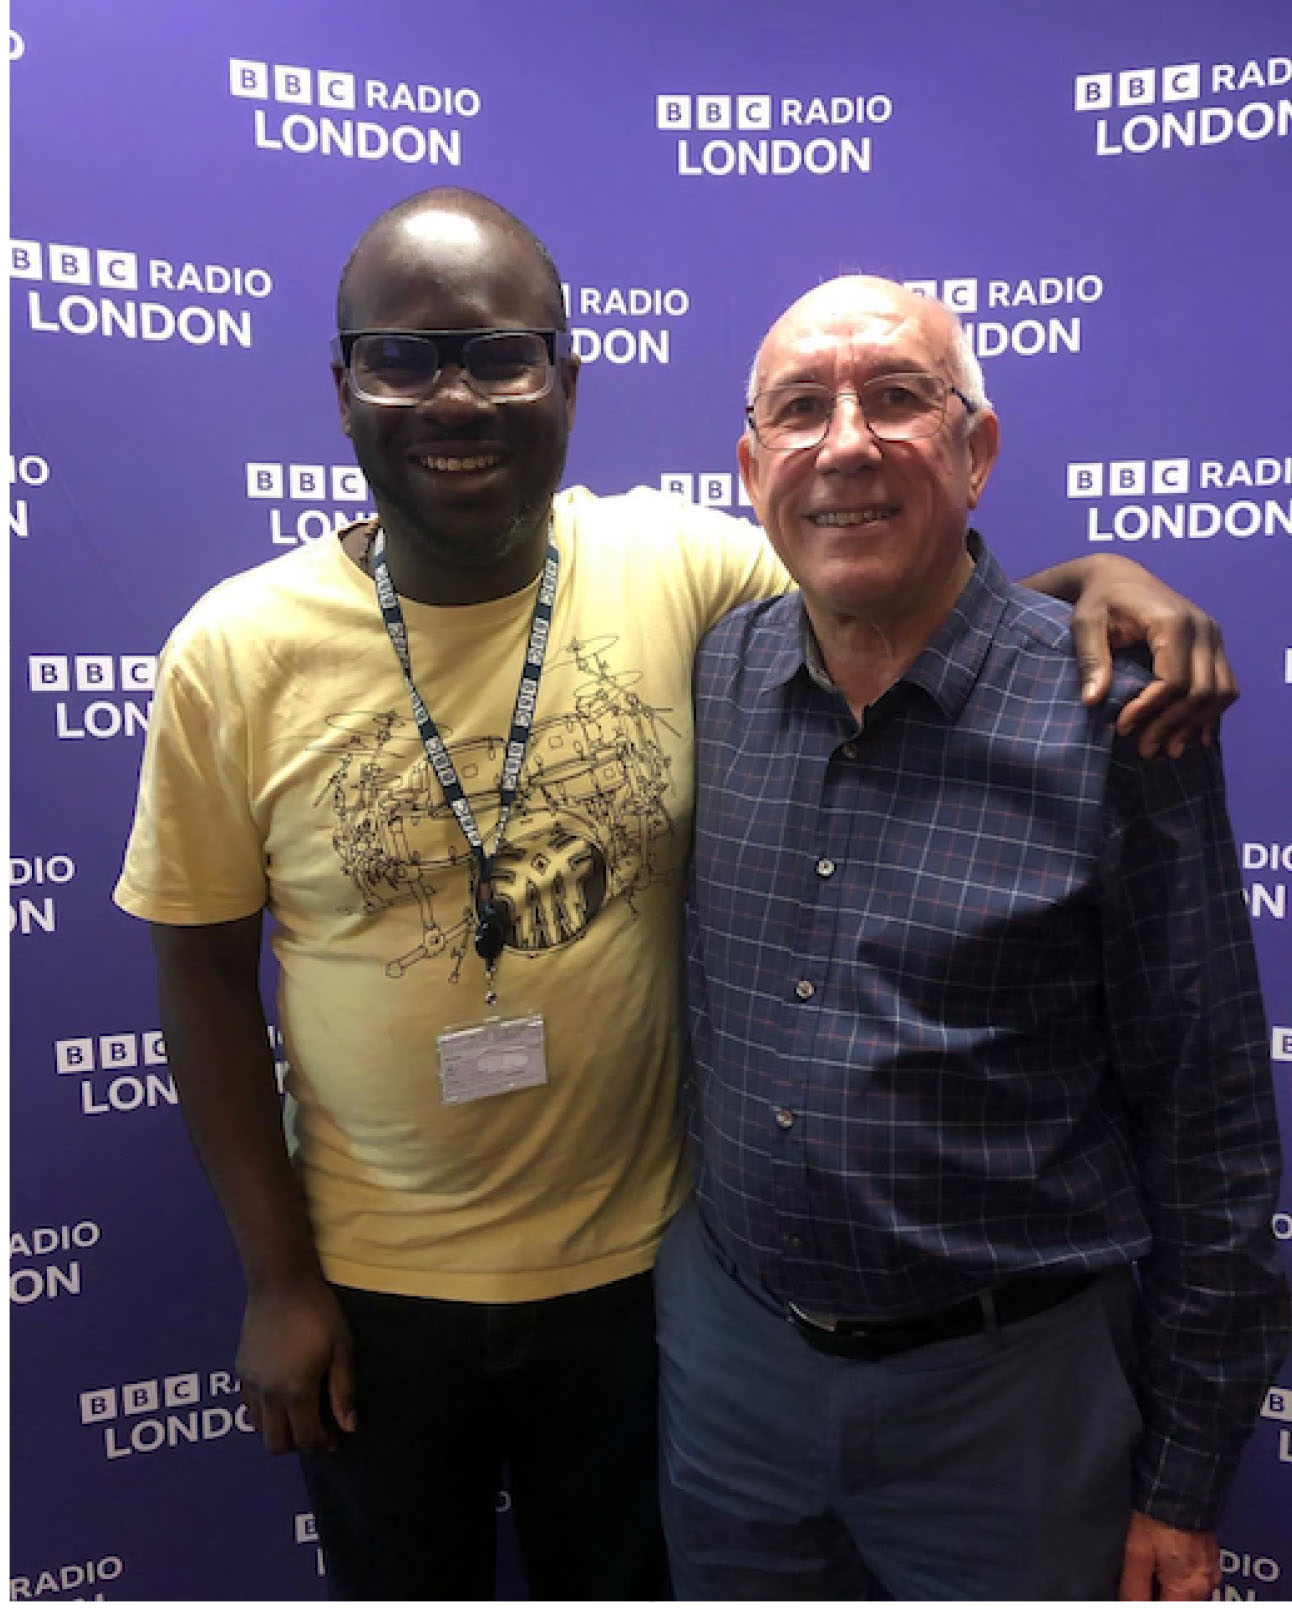 BBC London's Ed Adoo and LBM Chairman Leon Daniels